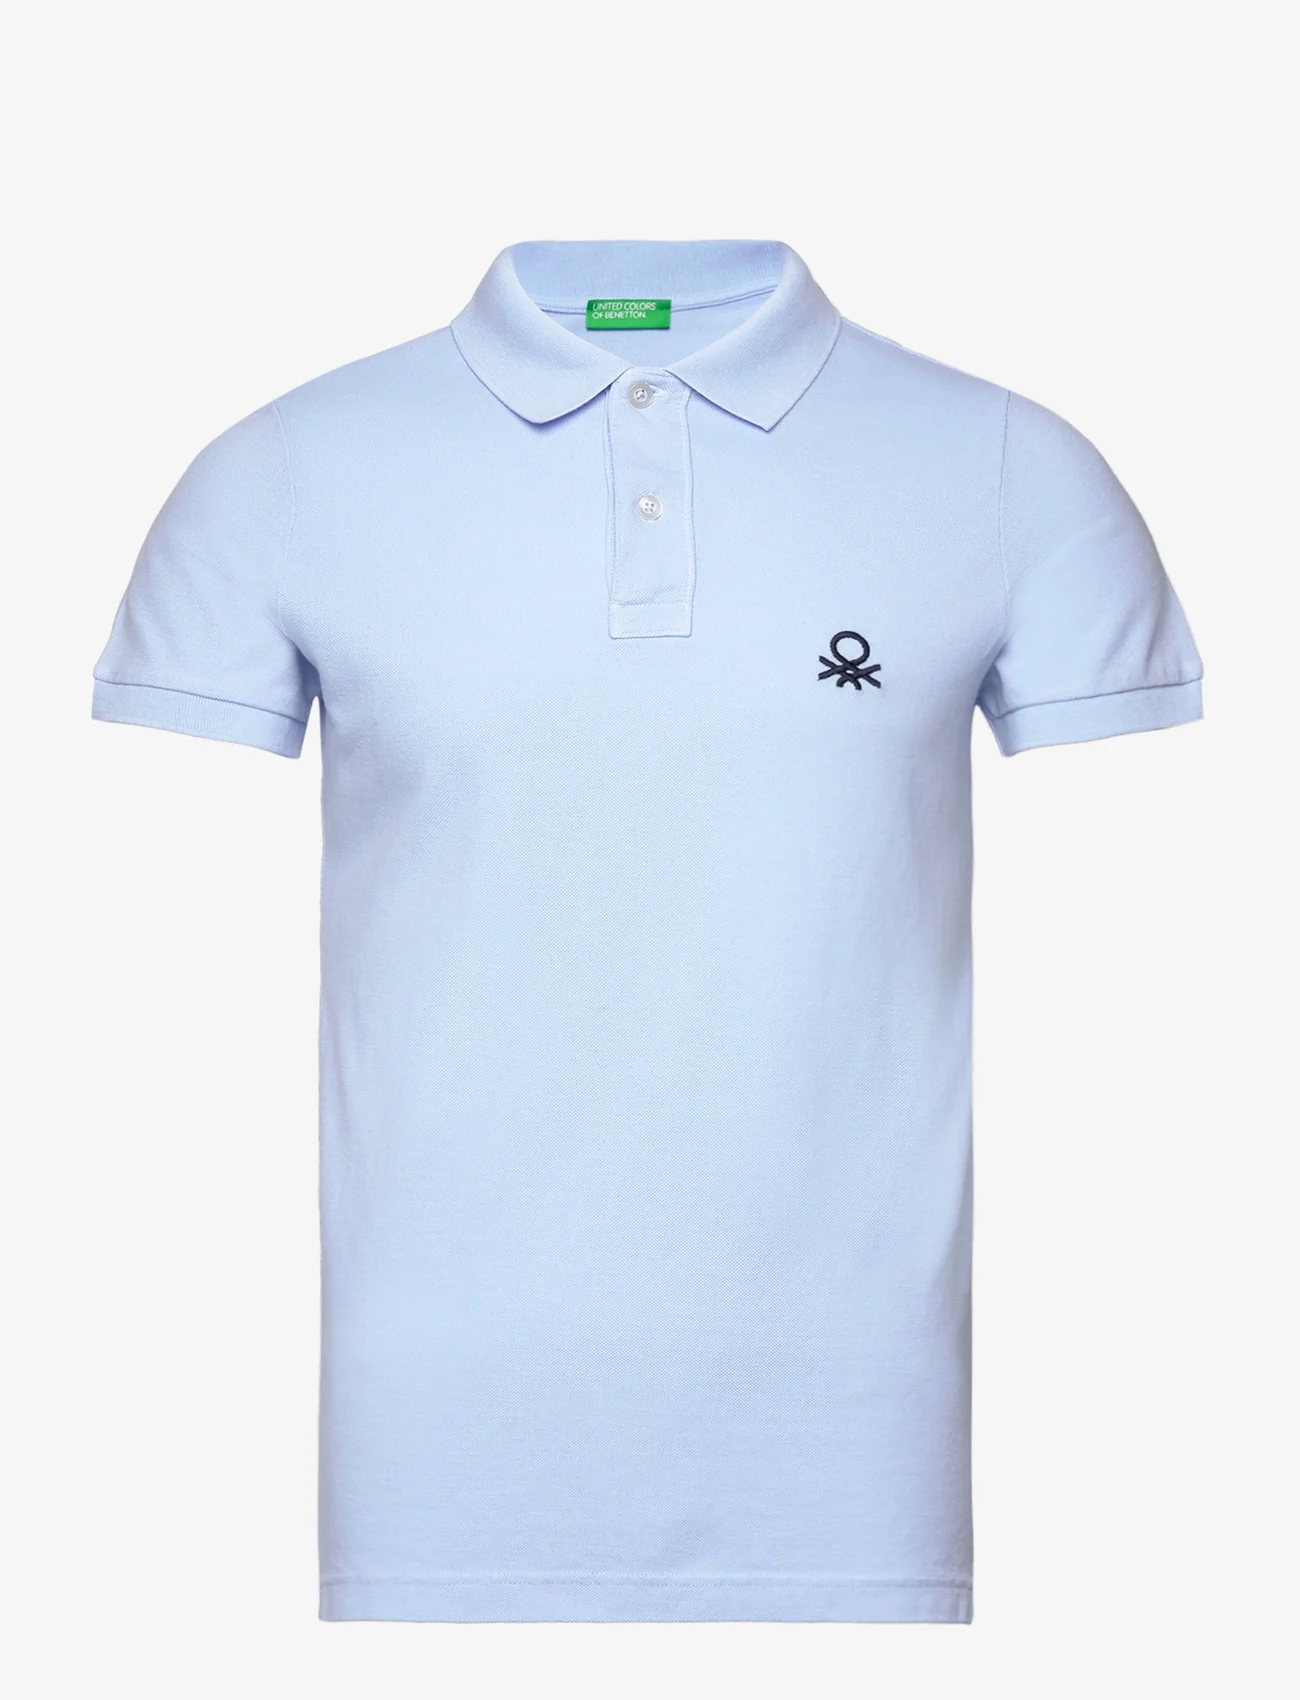 United Colors of Benetton - H/S POLO SHIRT - polo marškinėliai trumpomis rankovėmis - blue - 0